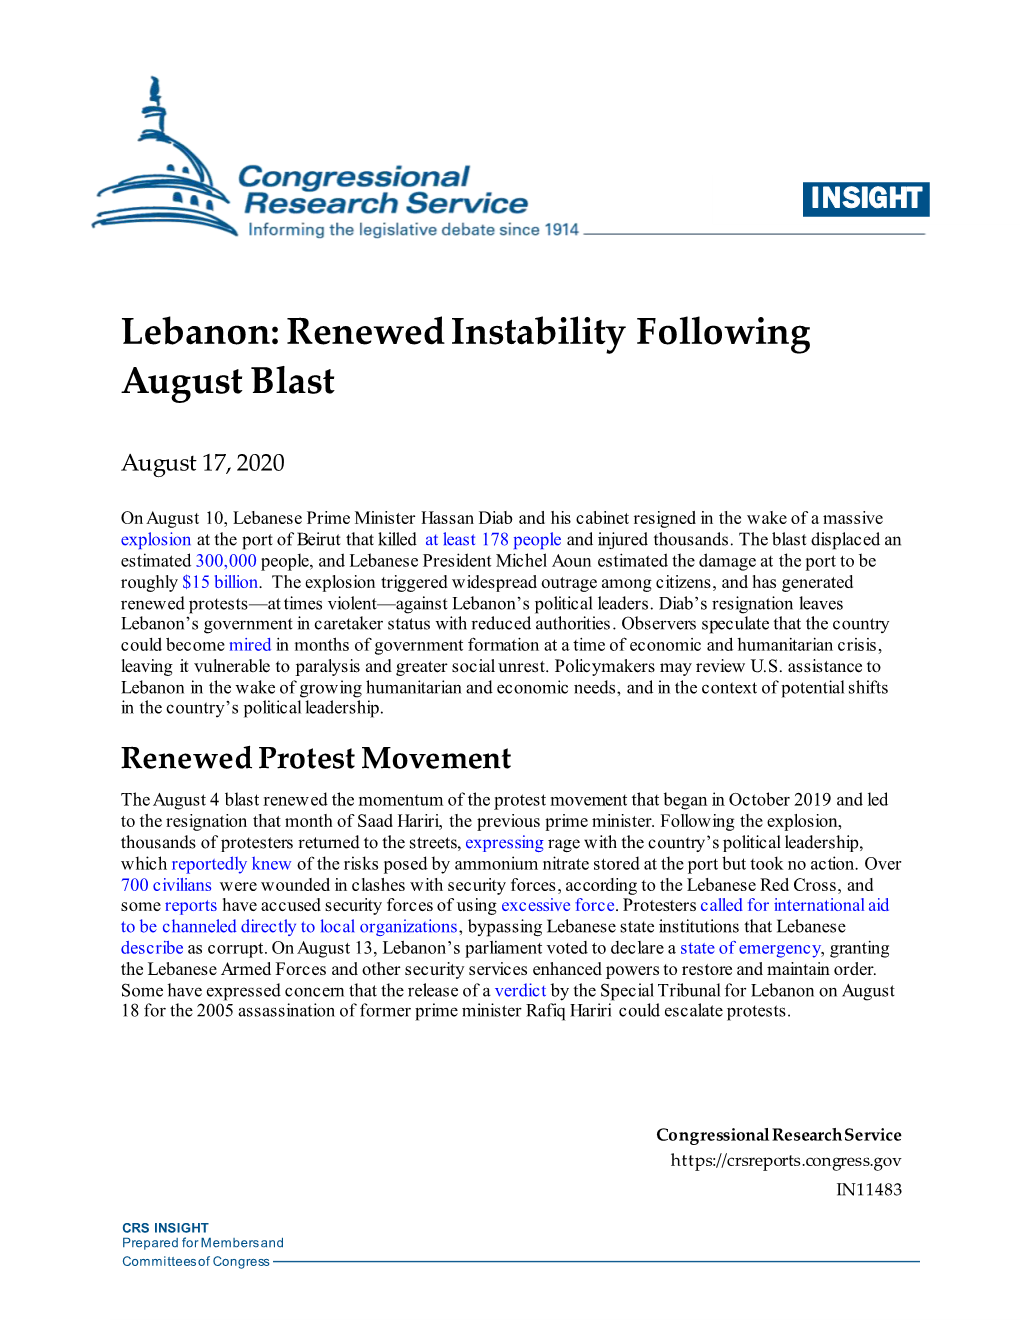 Lebanon: Renewed Instability Following August Blast